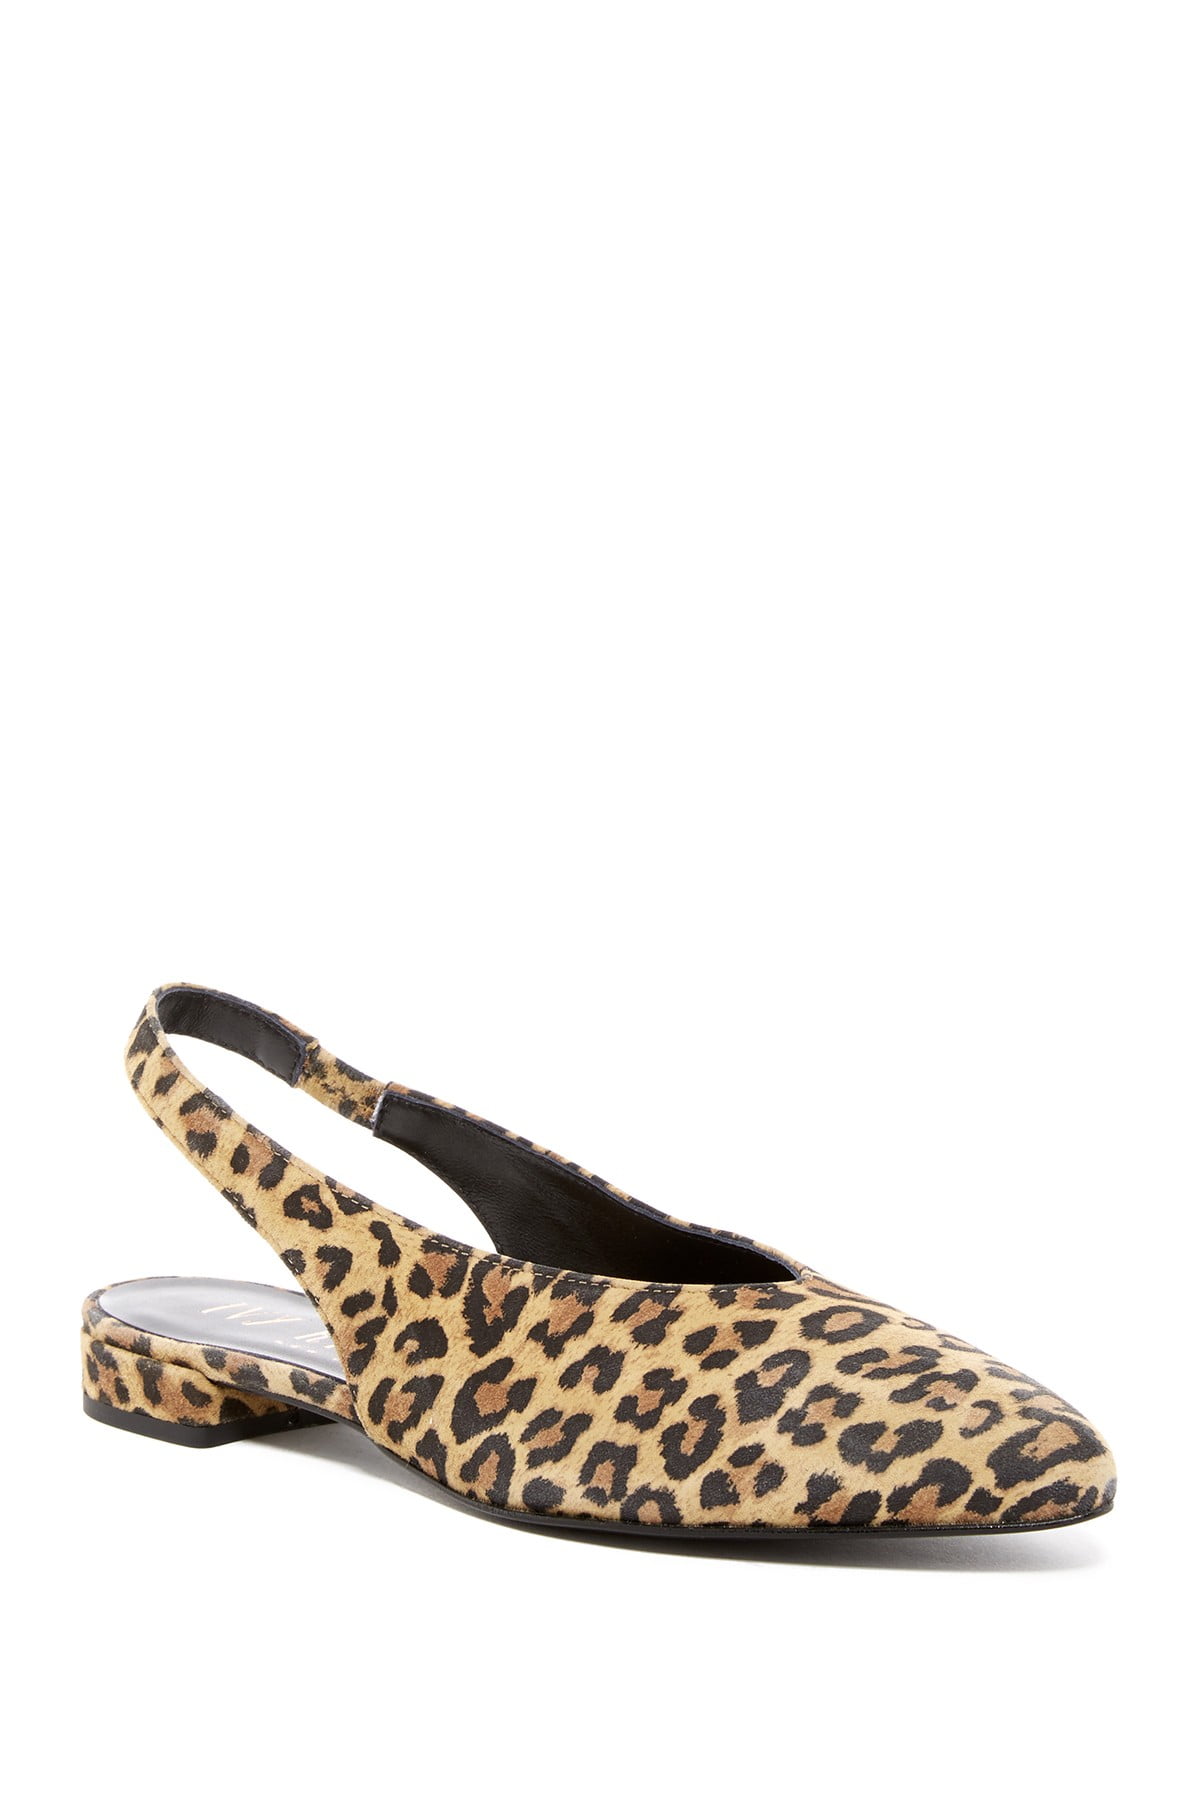 cheetah shoes walmart